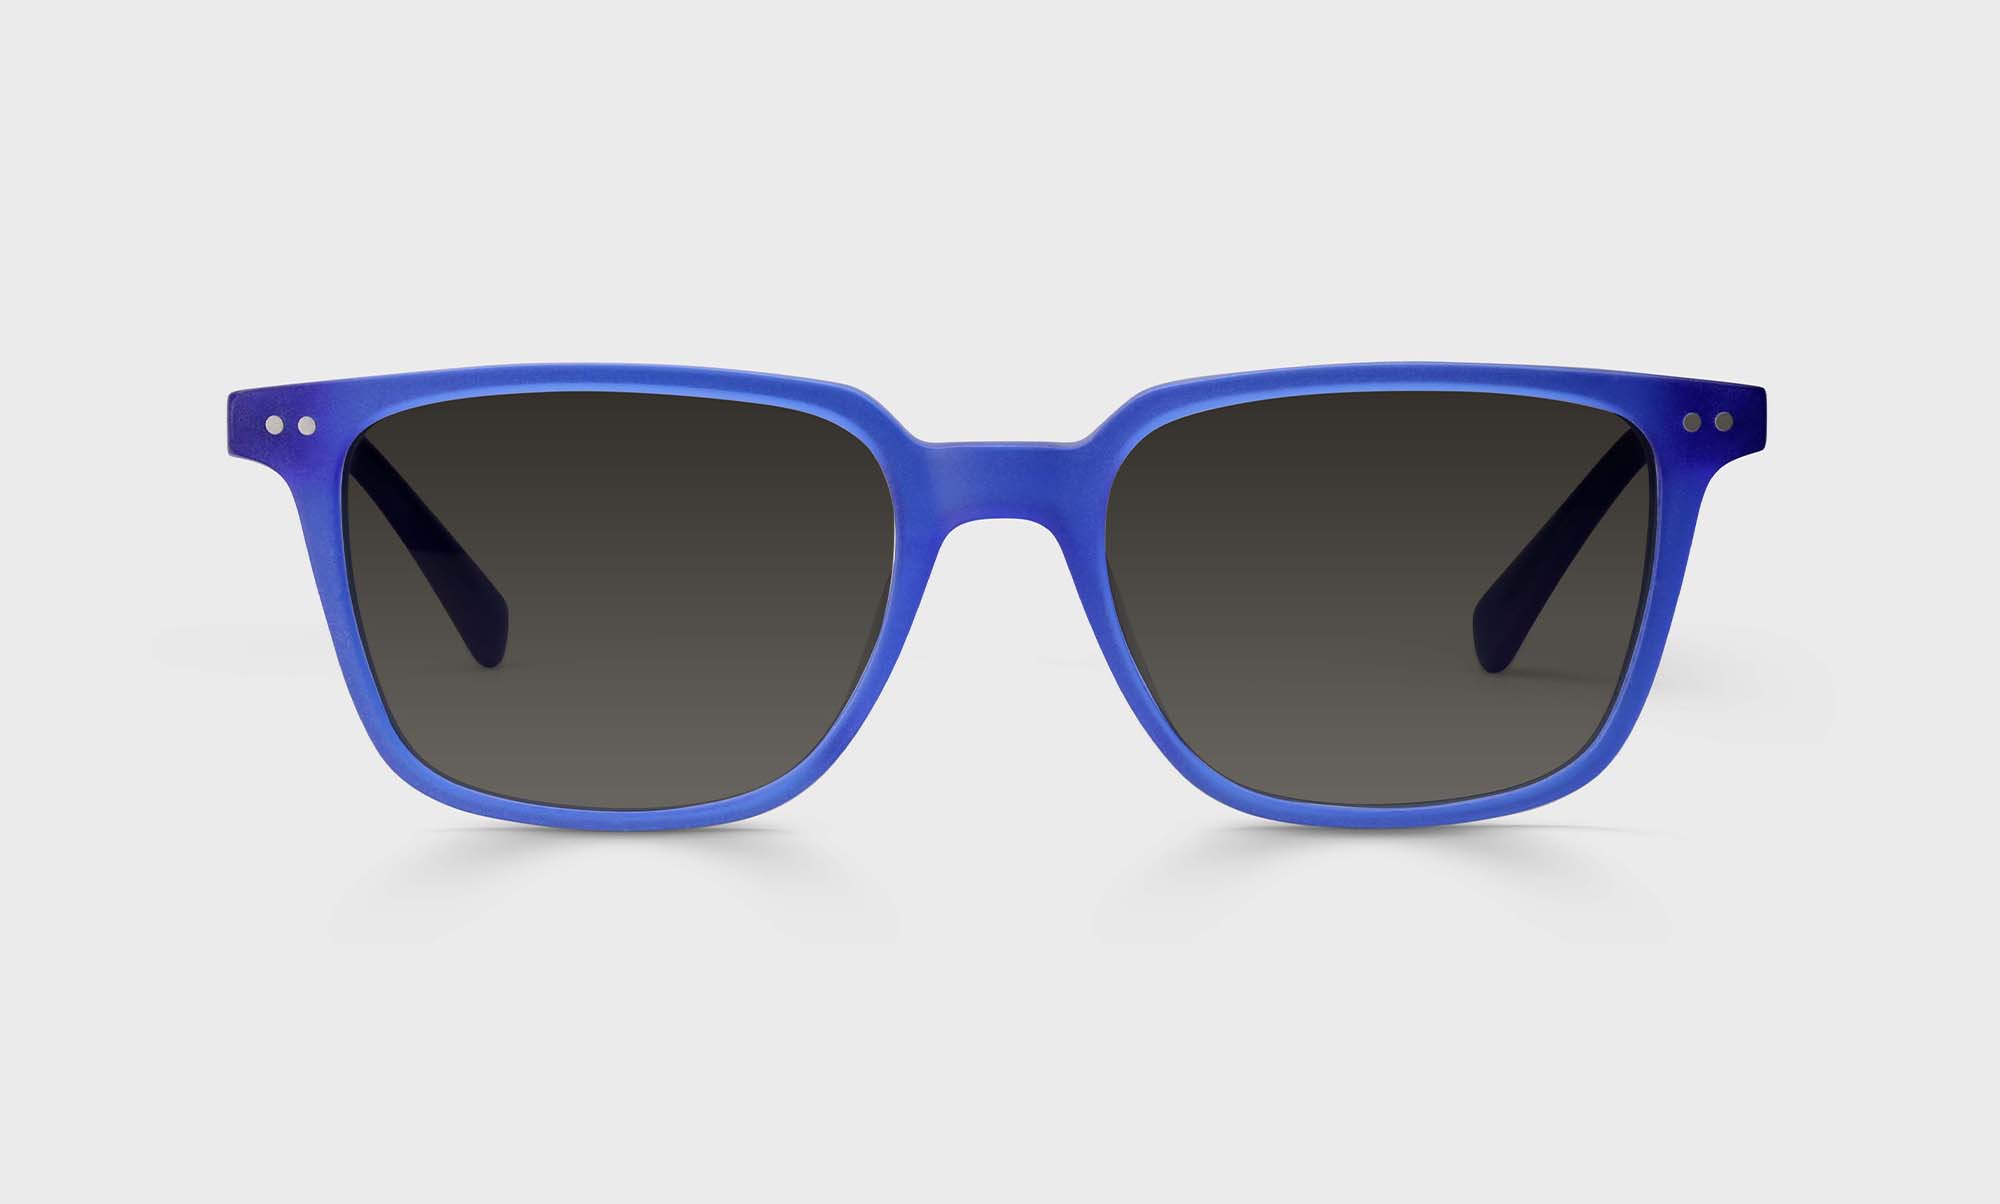 11-pg | eyebobs premium designer c suite readers, blue light and prescription glasses in blue, polarized grey